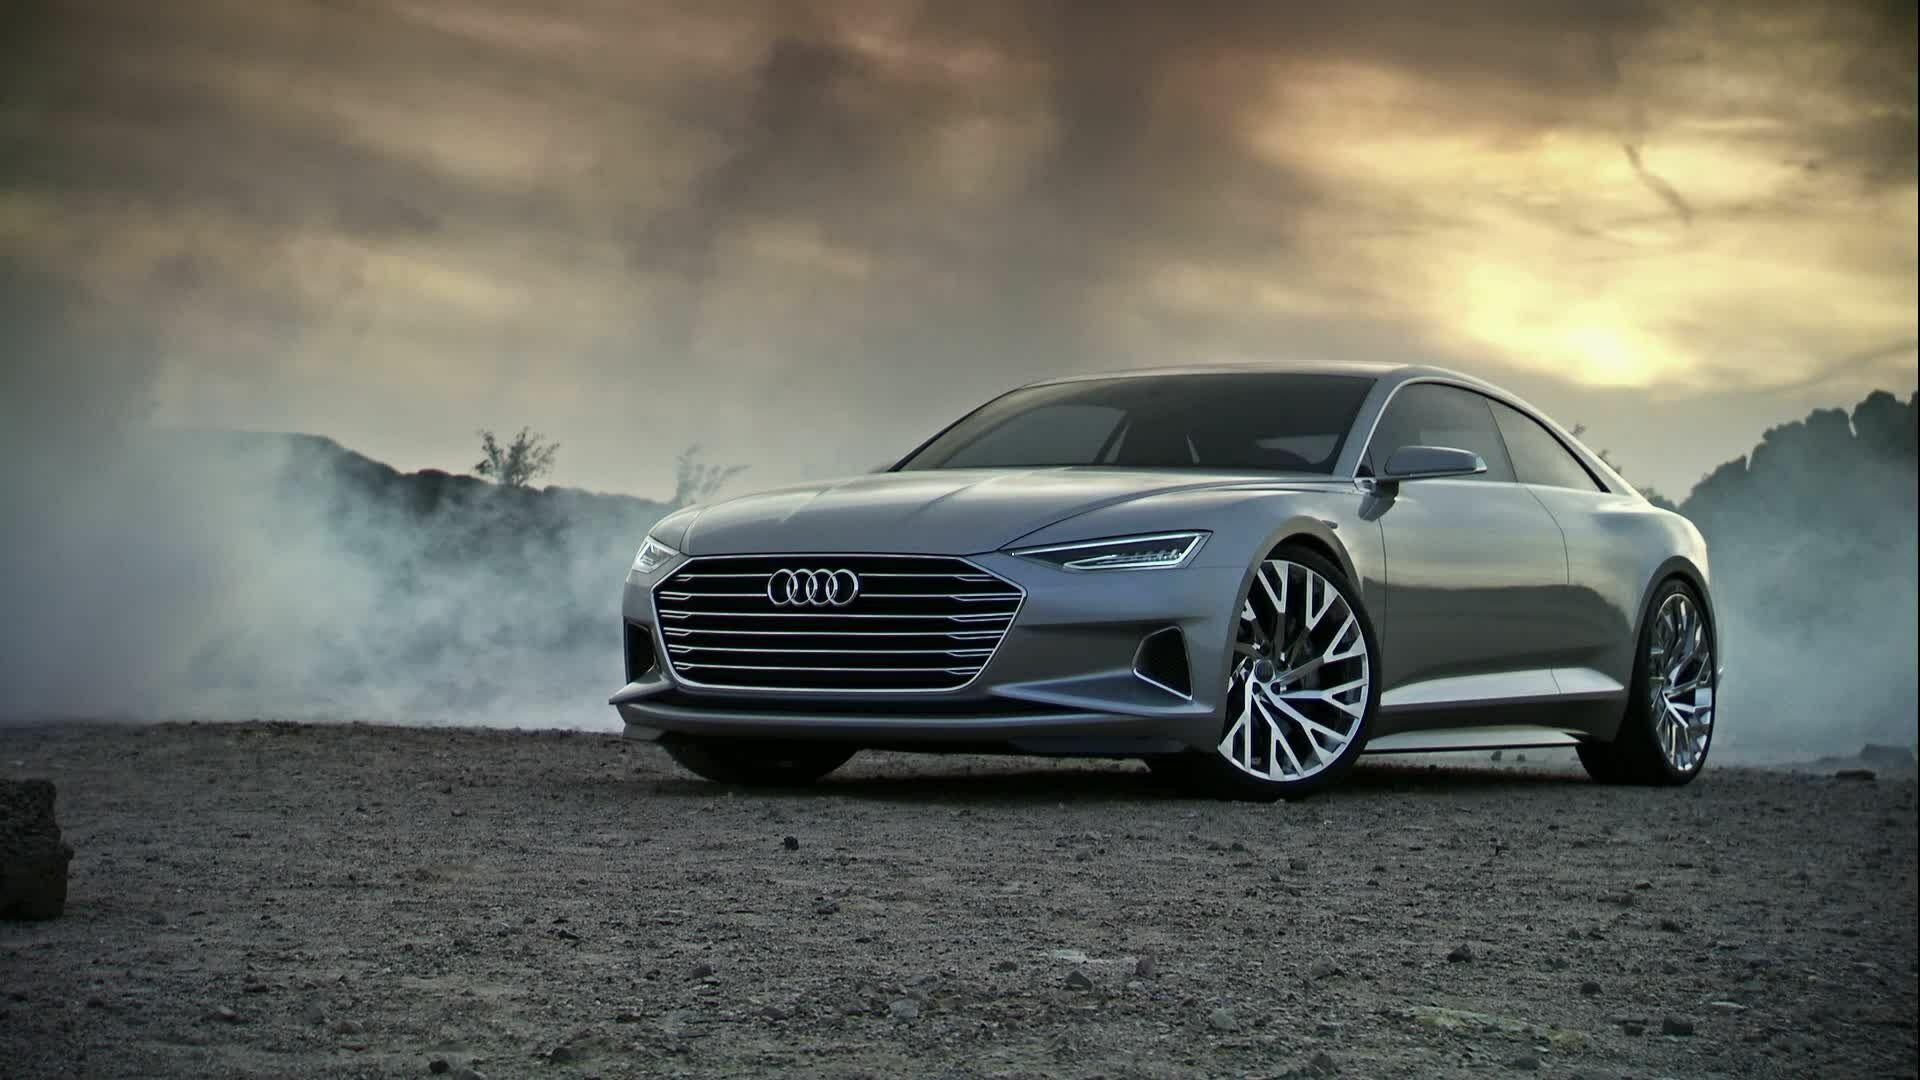 The Audi prologue show car – launching into a new design era